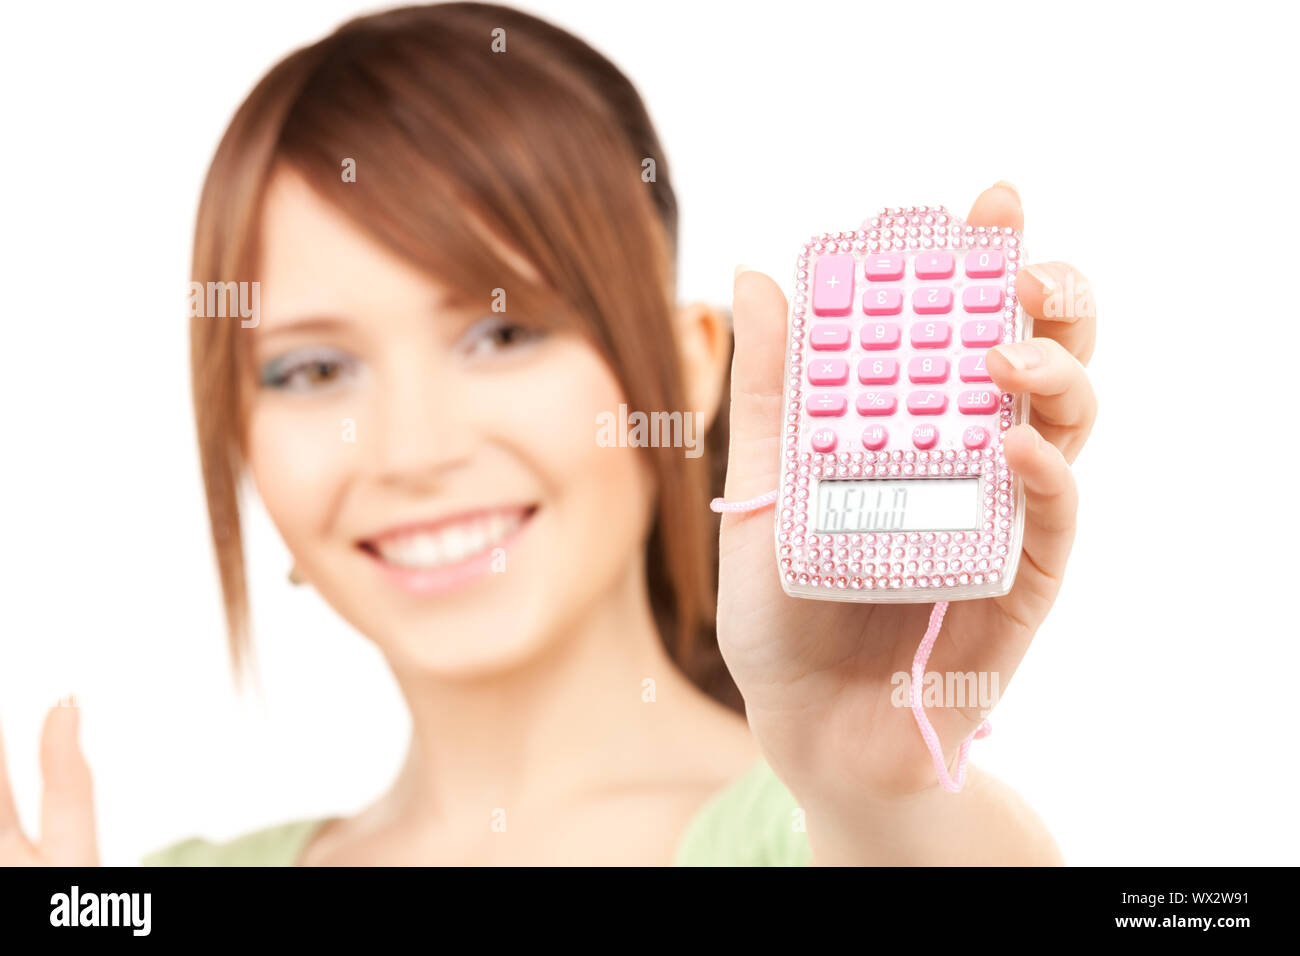 lovely teenage girl with calculator Stock Photo